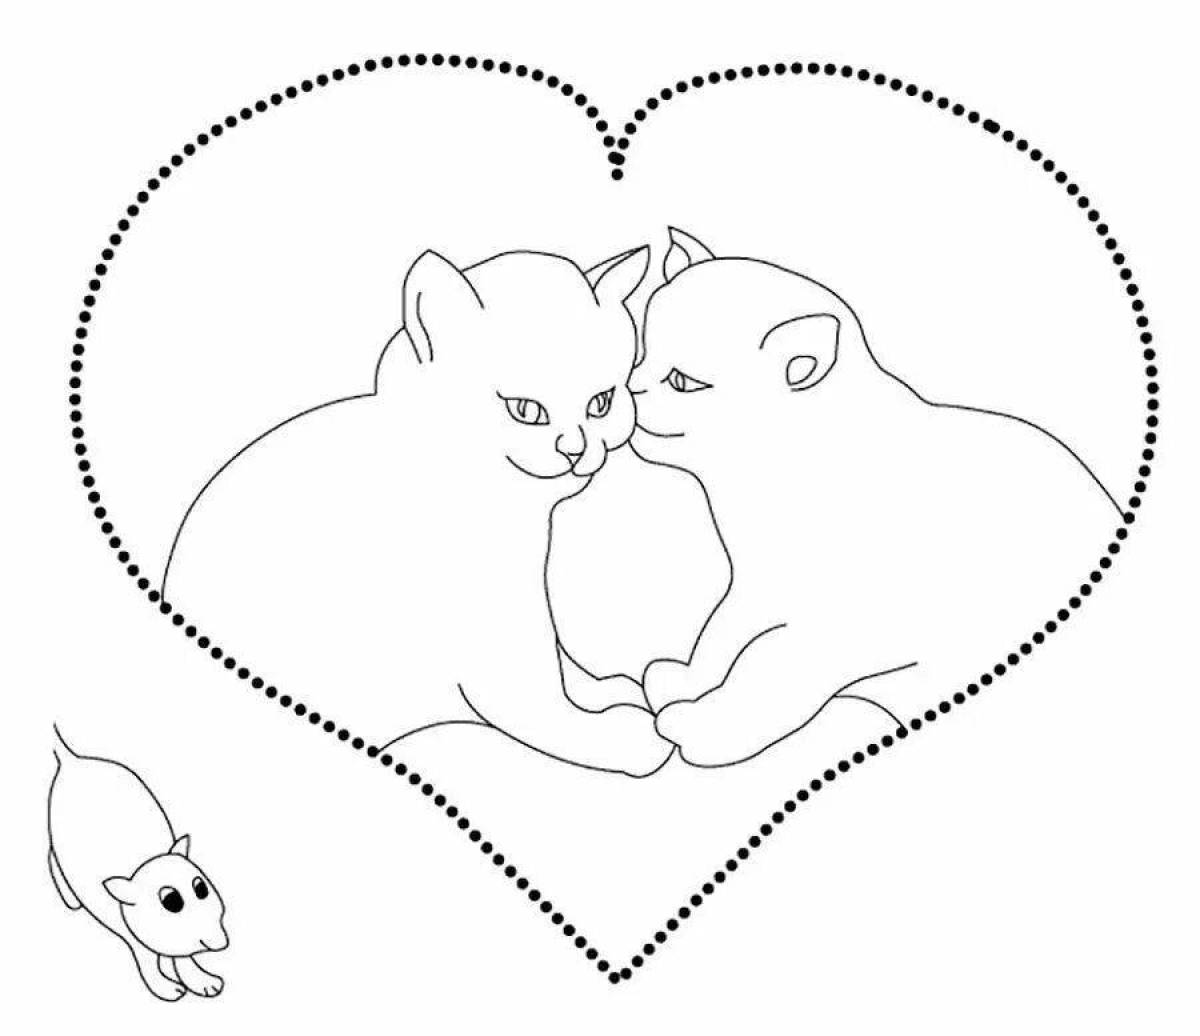 Раскраска котик с сердечком